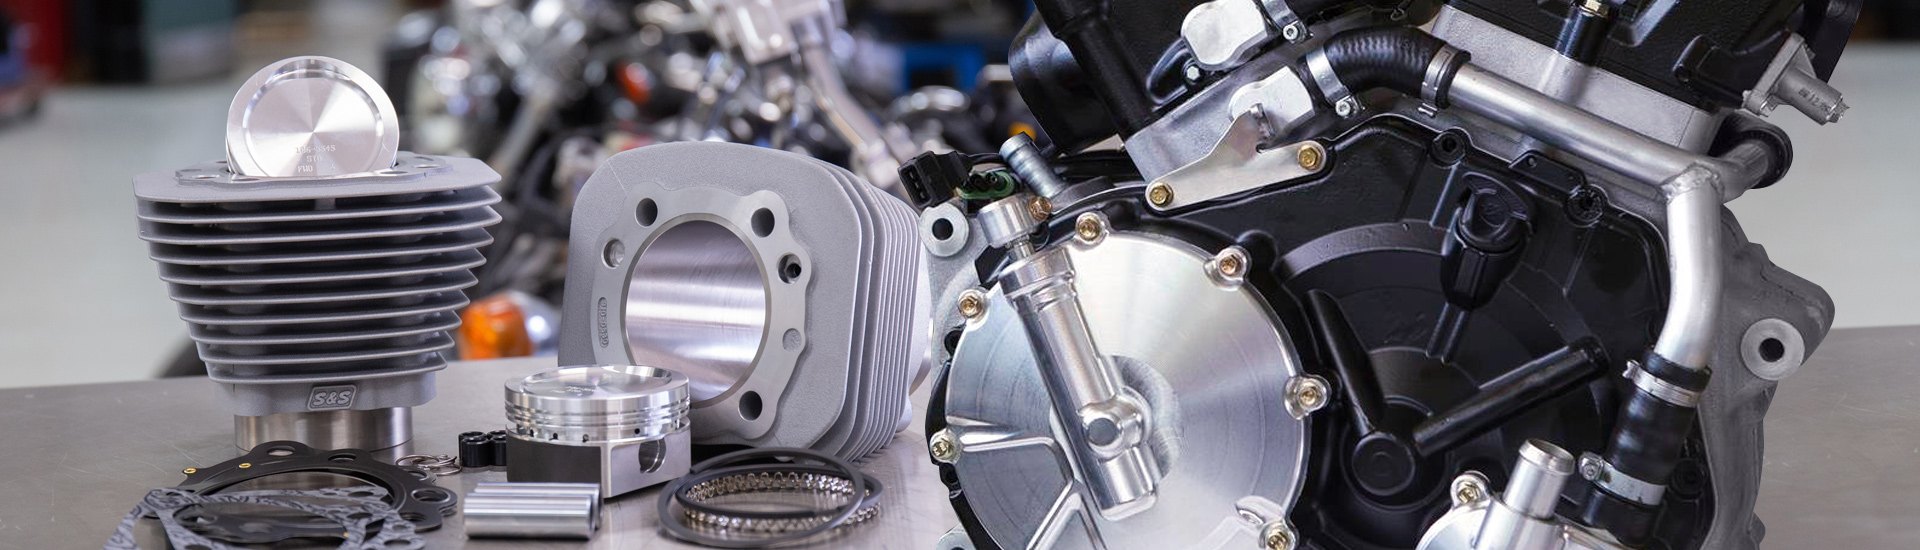 Kawasaki Vulcan 750 Engine Parts | Pistons  Camshafts - MOTORCYCLEiD.com